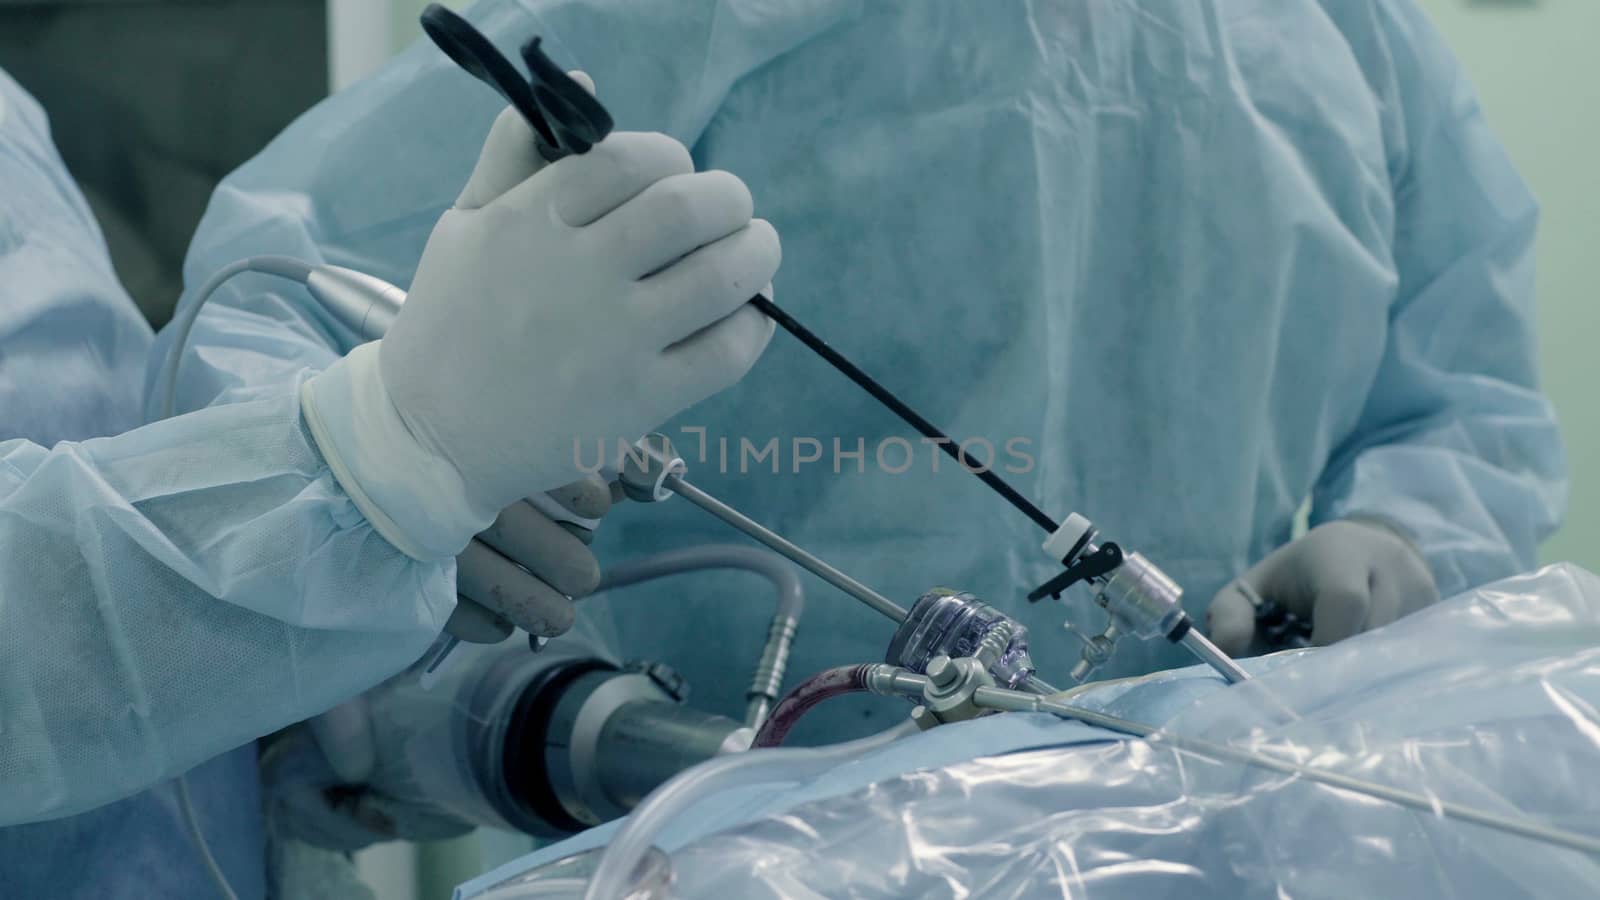 Laparoscopic surgery of the abdomen by Chudakov